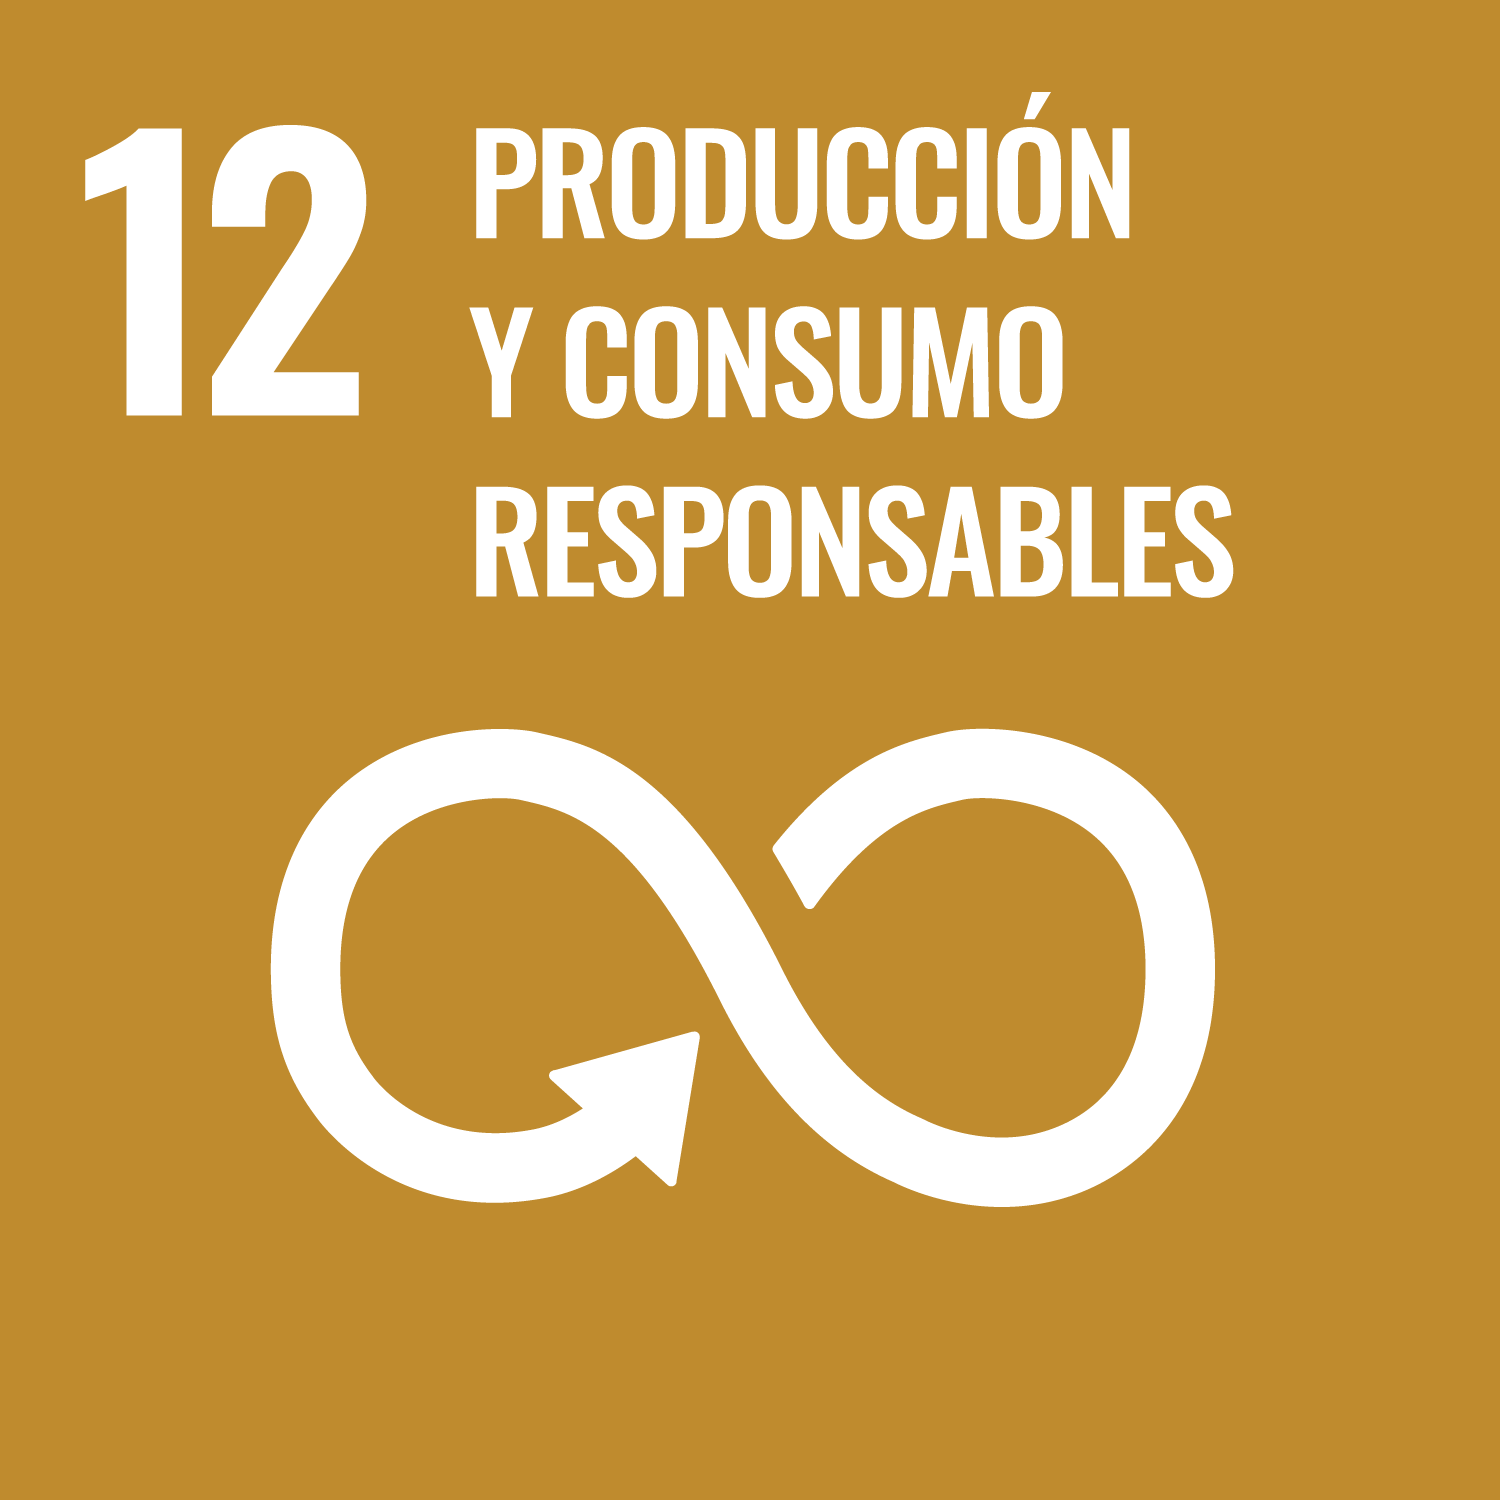 ODS 12 Producción y consumos responsables en Visita Gijón Profesional